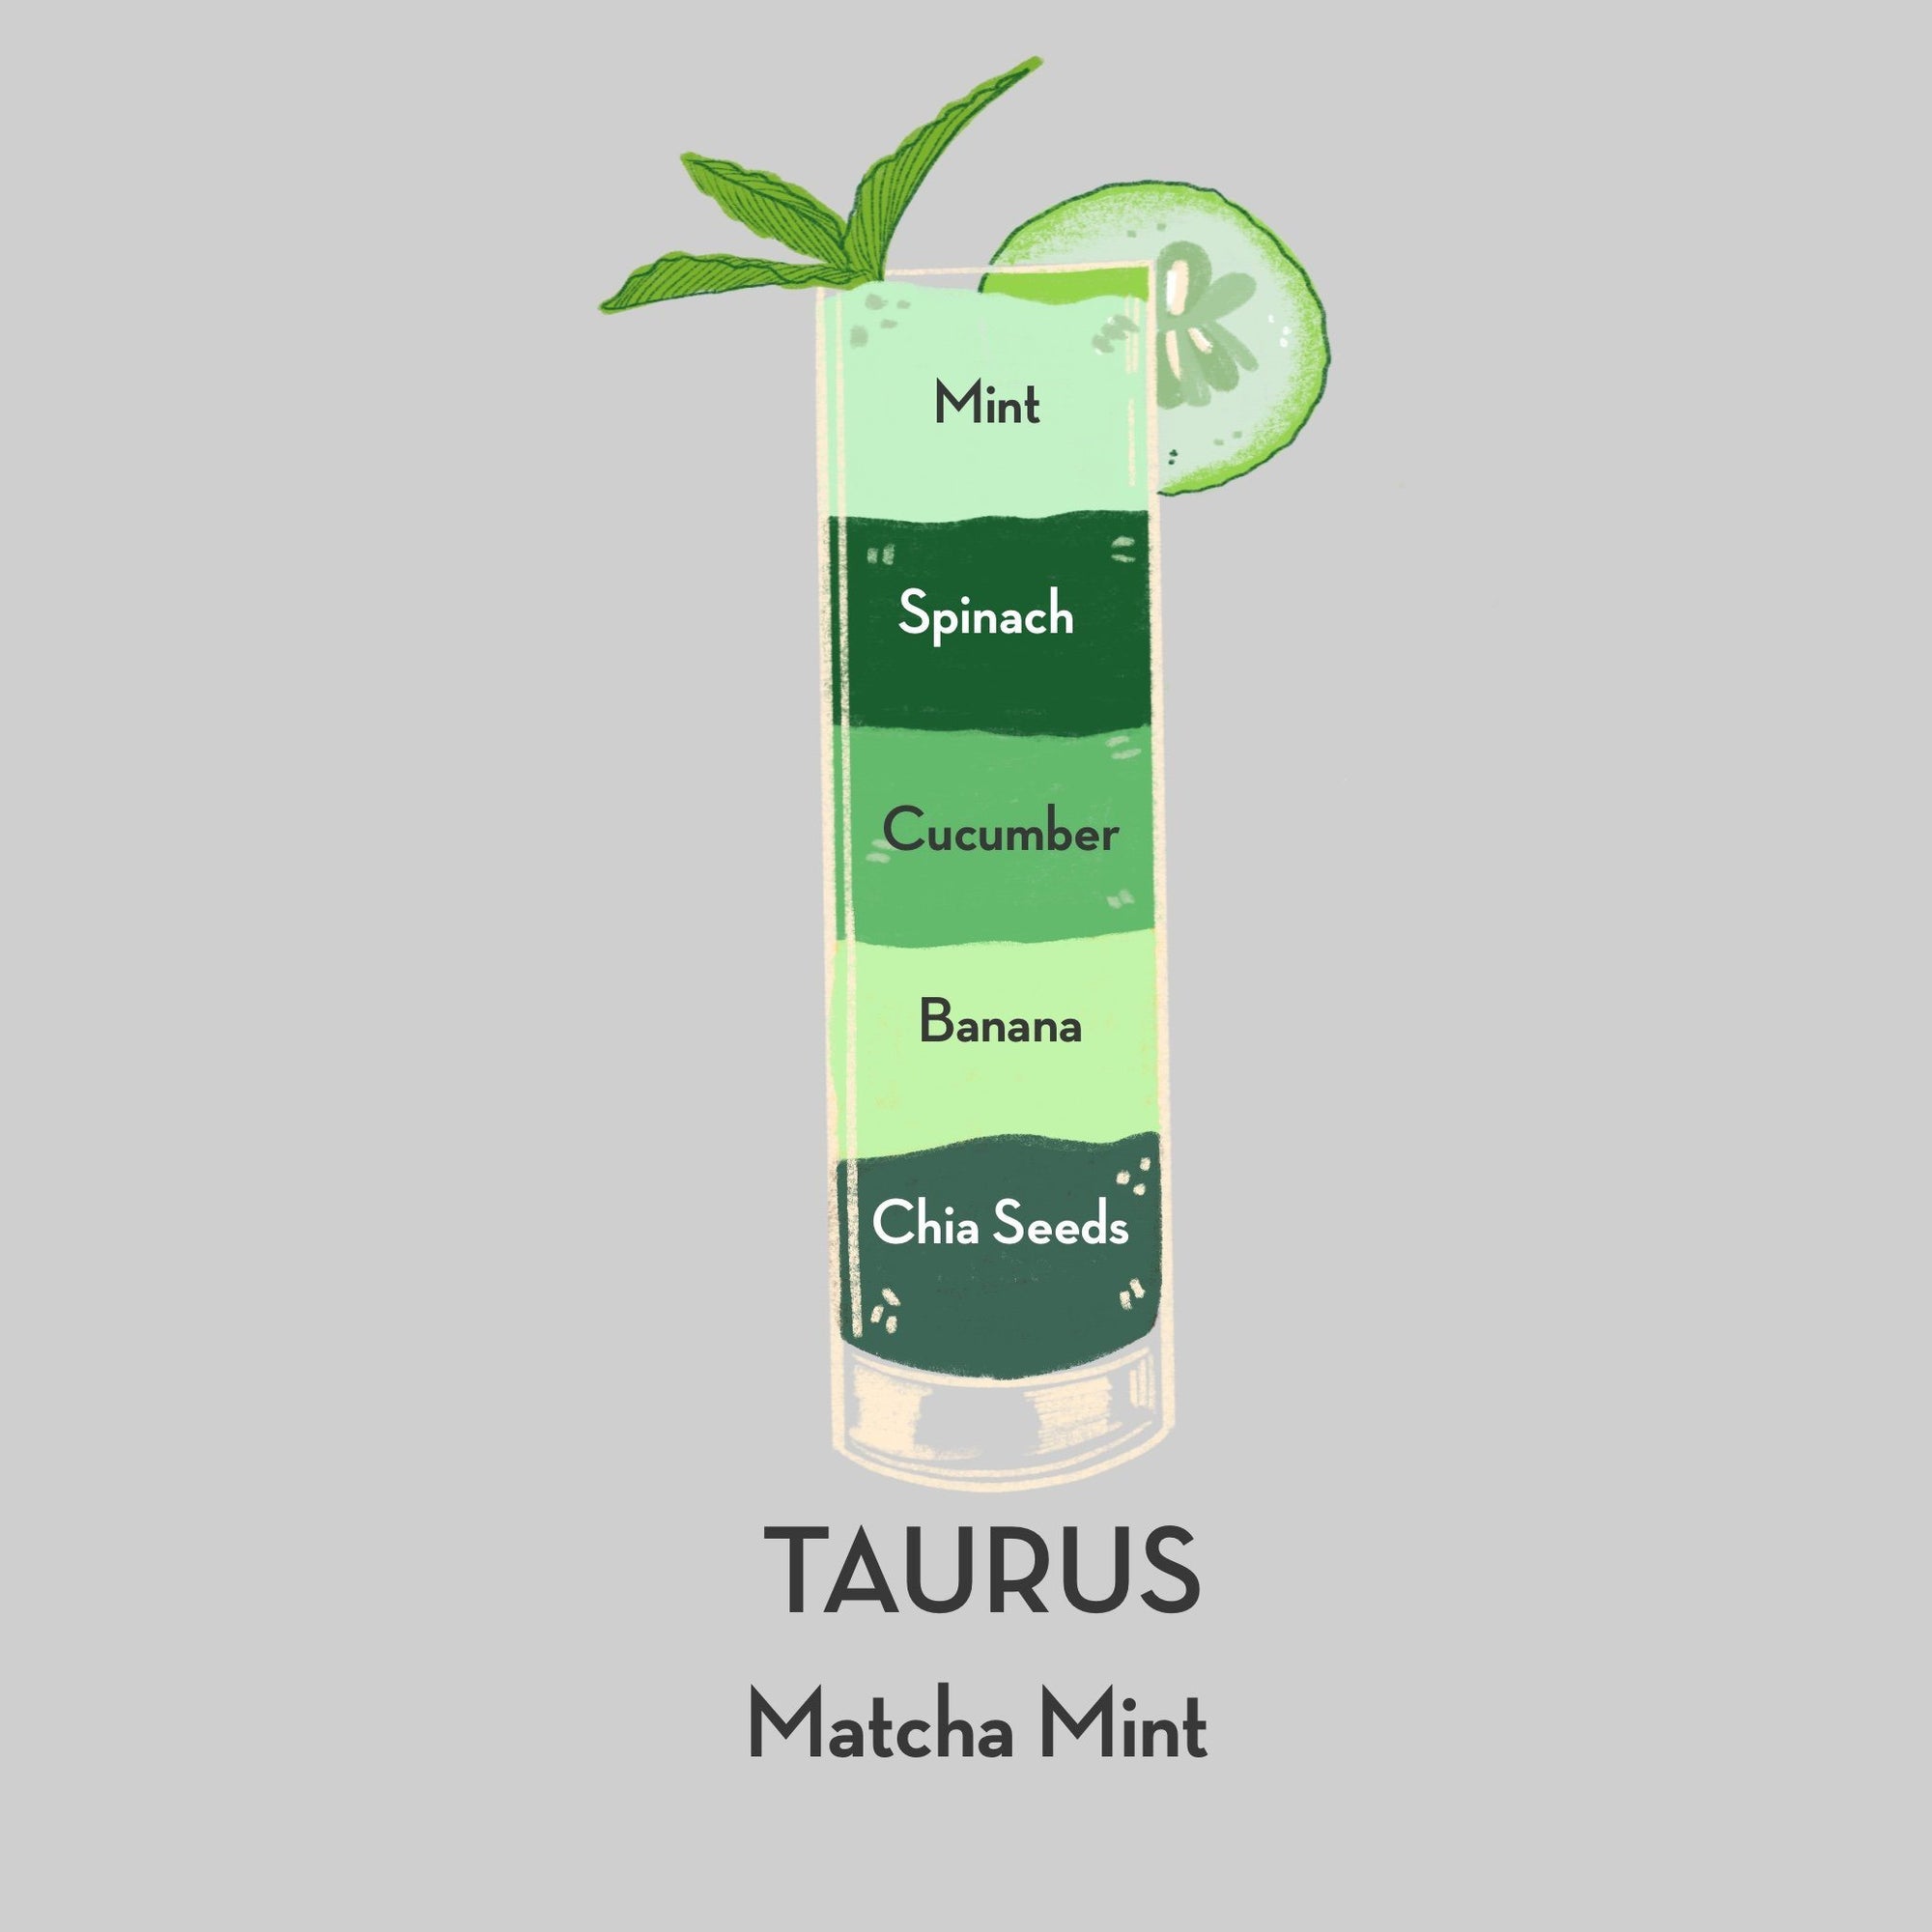 Recipe for Vegan and paleo Matcha Mint Loaded Greens smoothie made with JOYÀ Focus matcha-moringa elixir blend